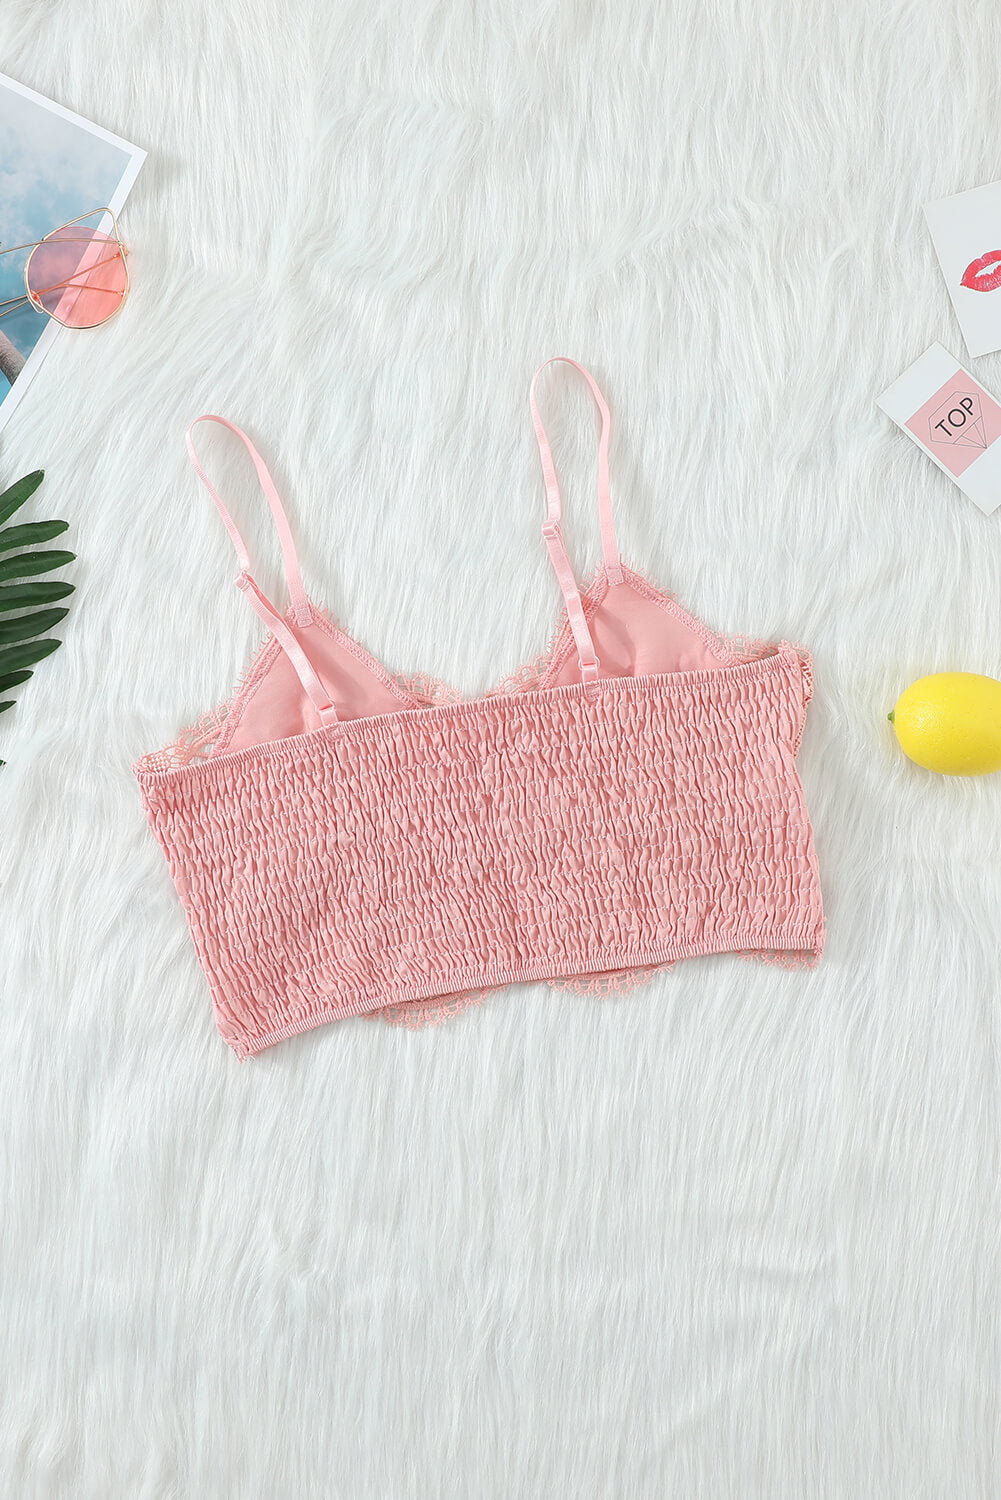 Pink Patterned Push Up Crochet Lace Bralette